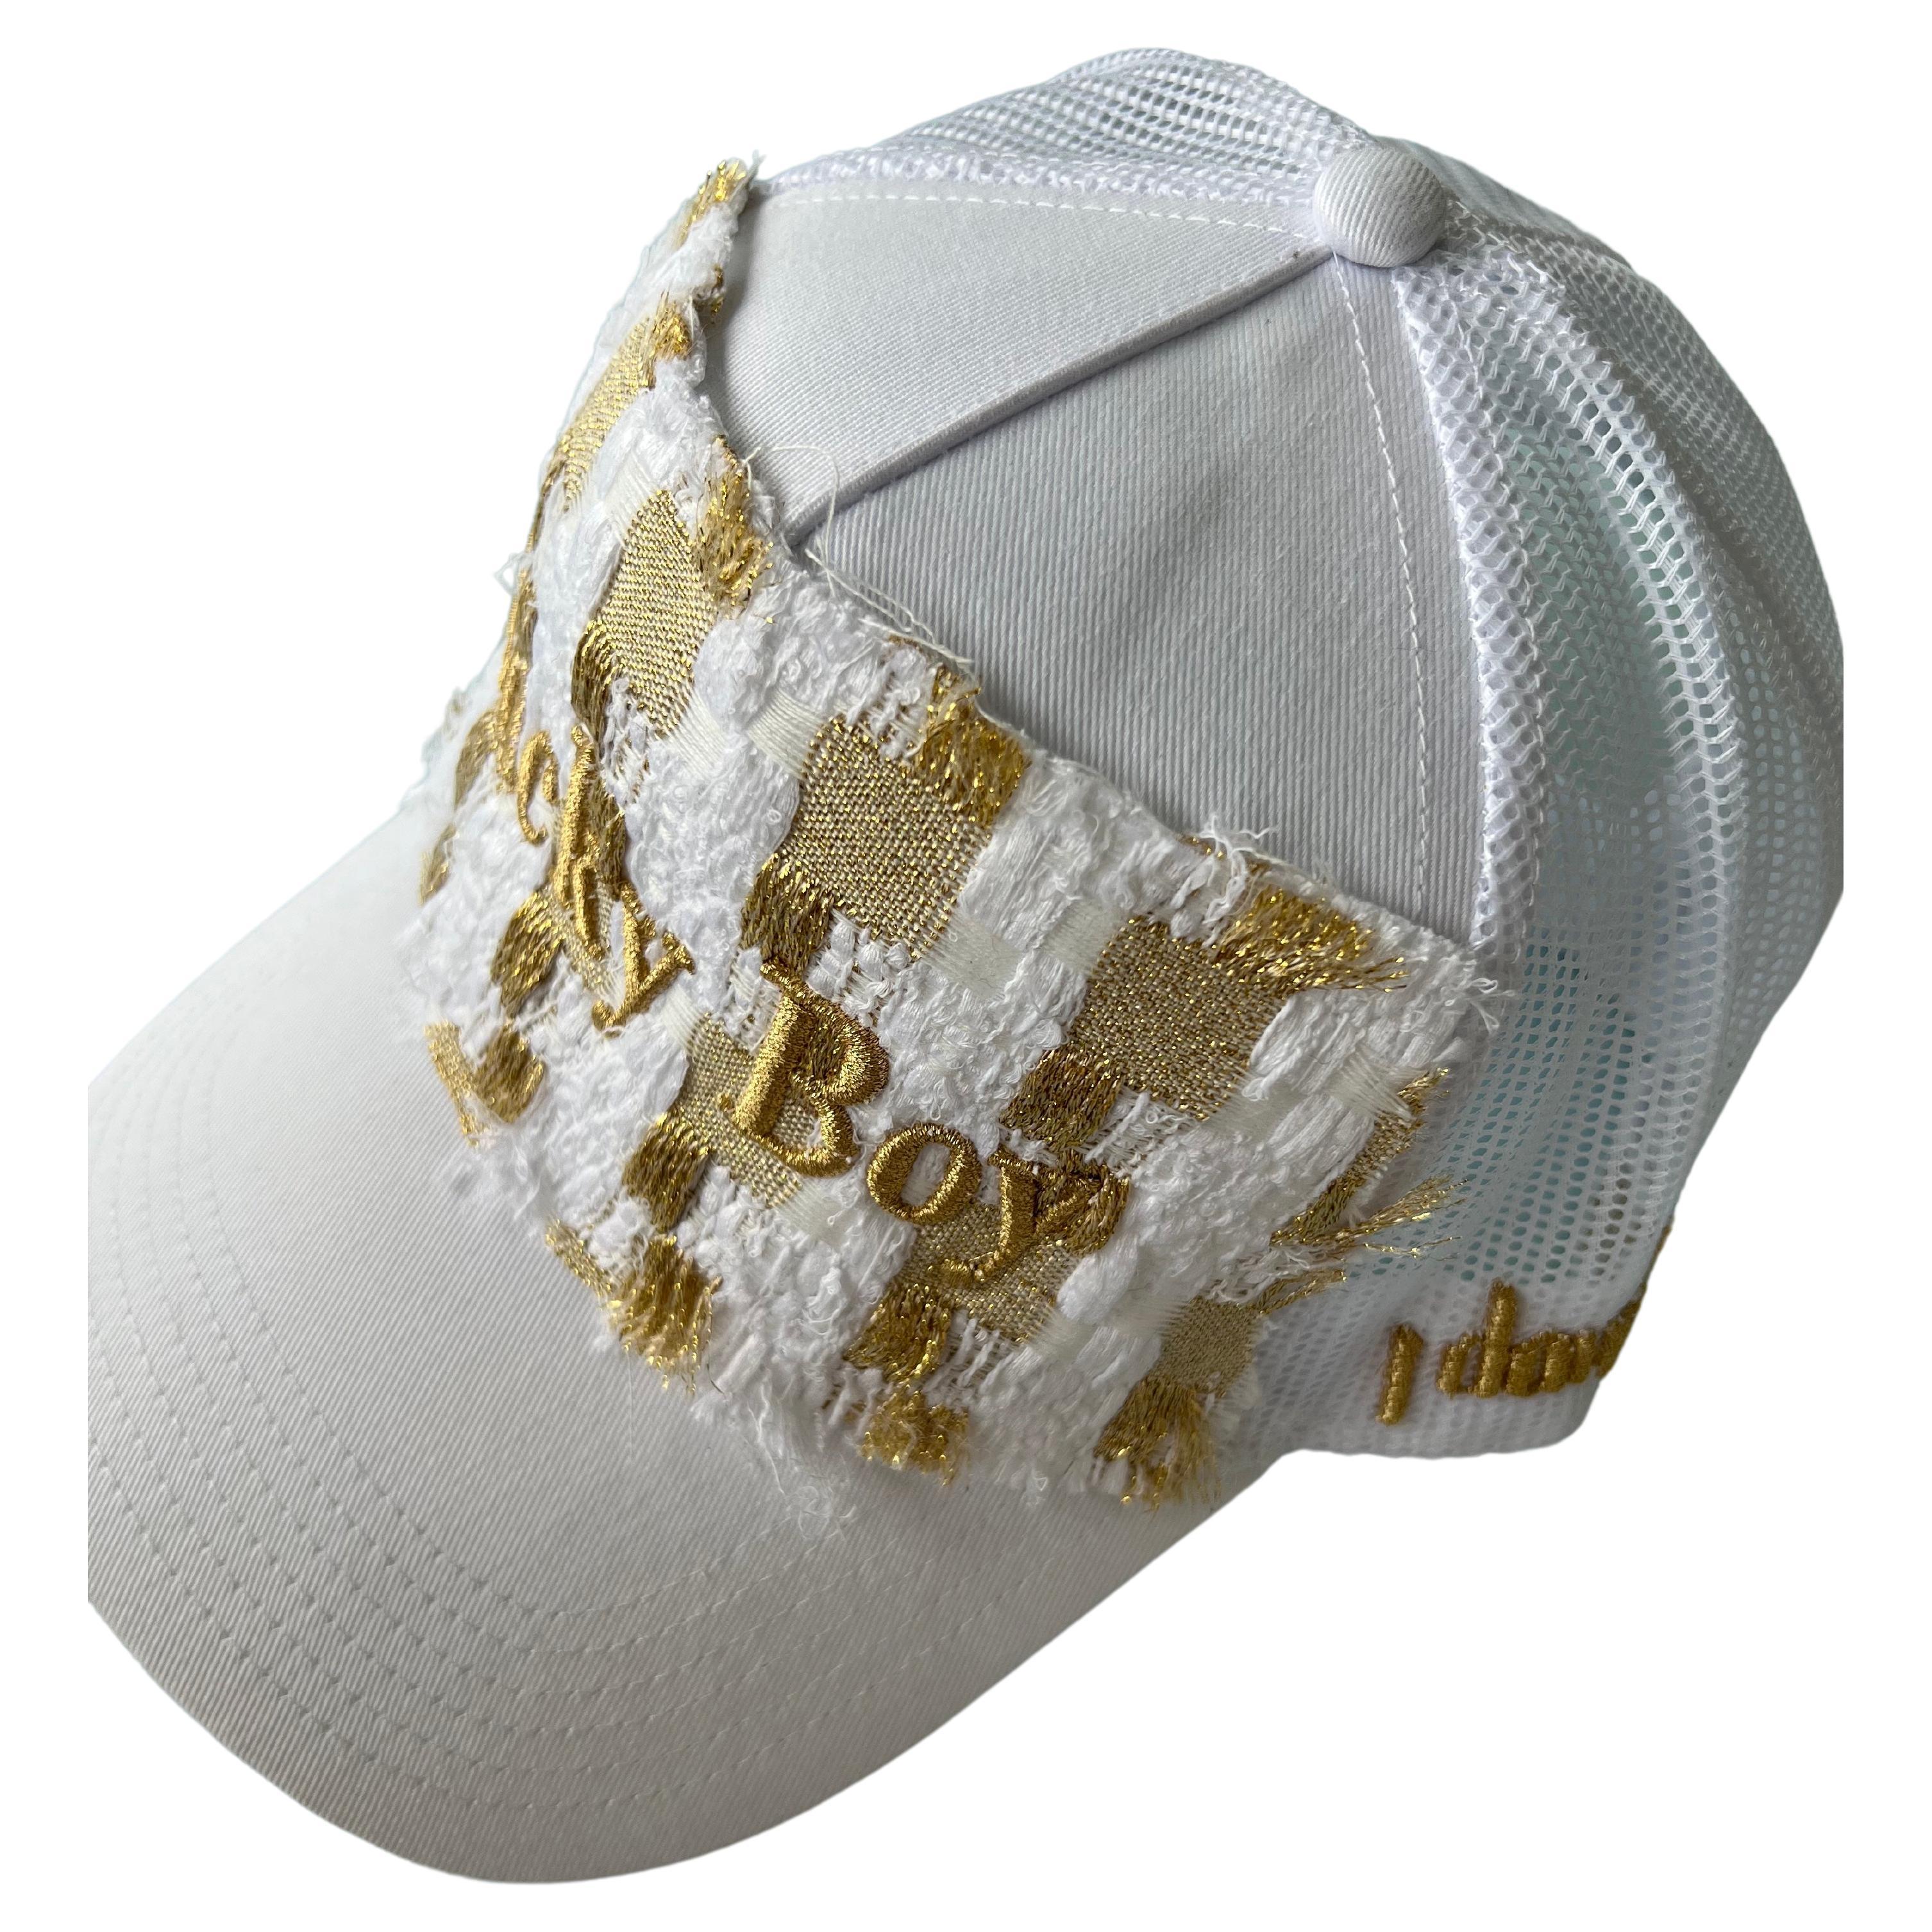 Brand: J Dauphin

Trucker Hat Cotton White French Tweed Gold 